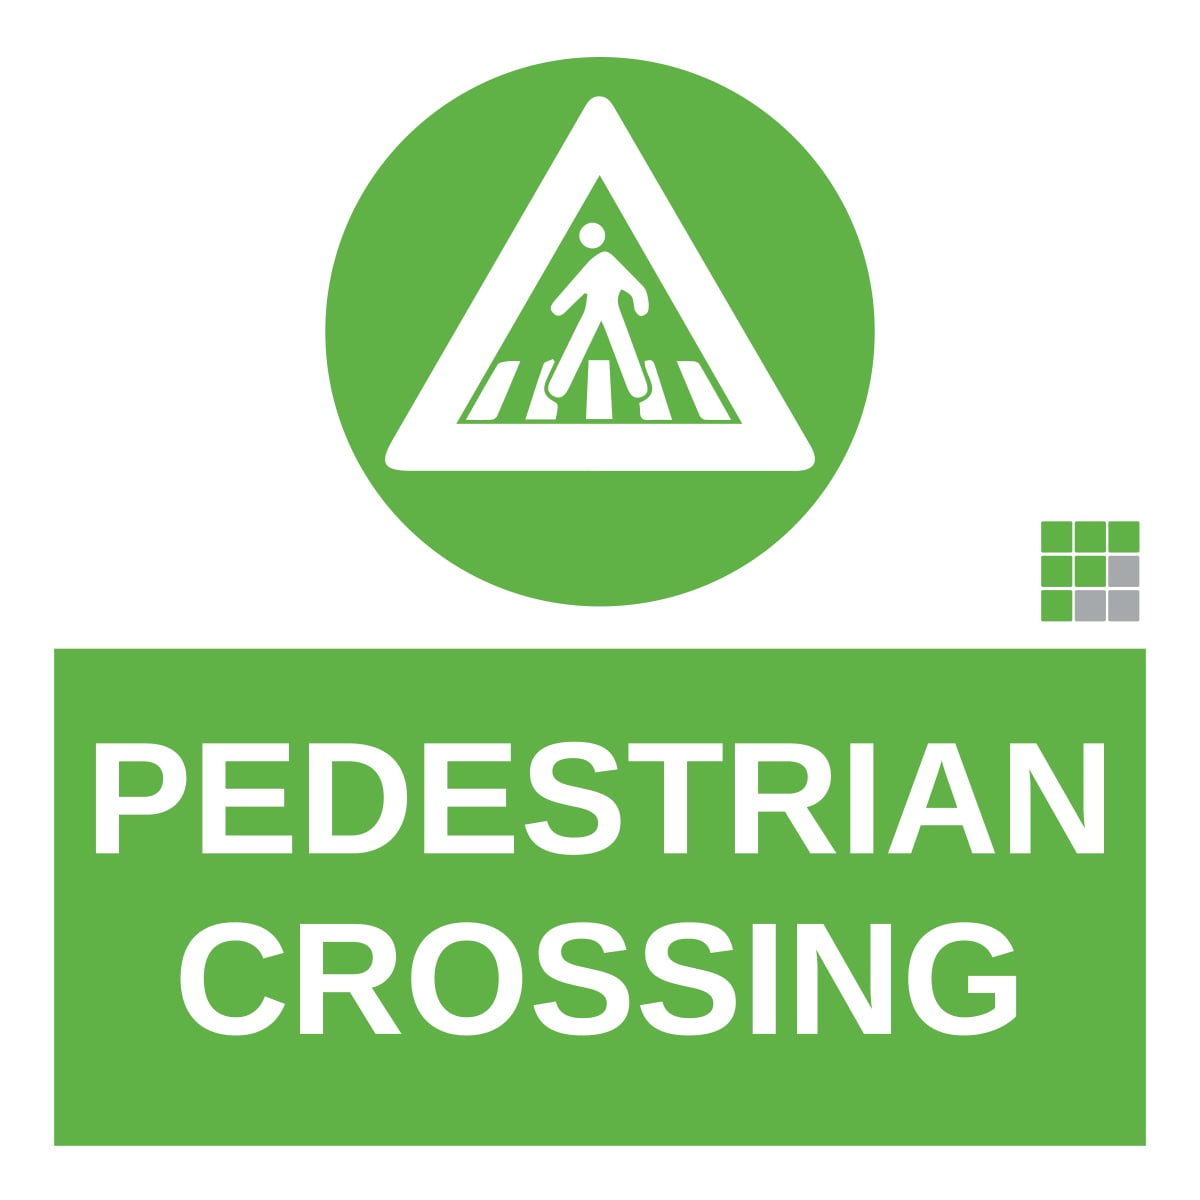 pedestrian crossing - 1x1ft.jpg